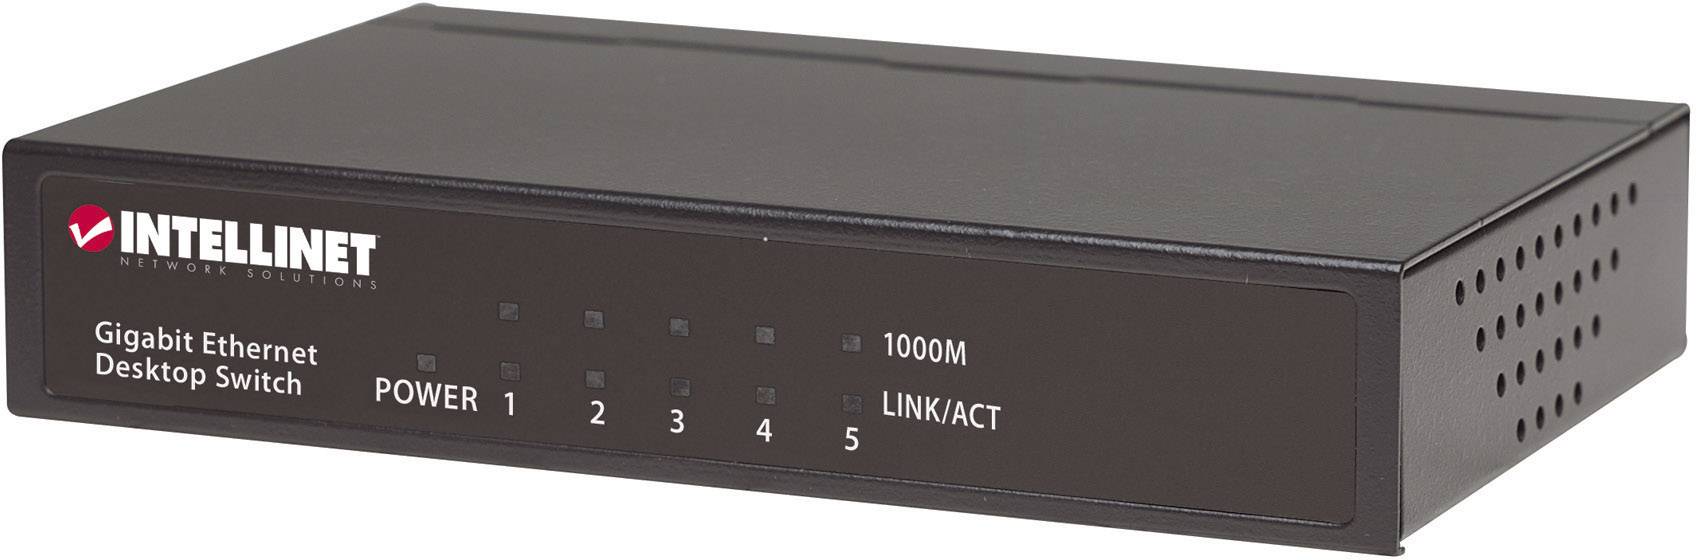 INTELLINET Gigabit Ethernet DestopSwitch 5 Port